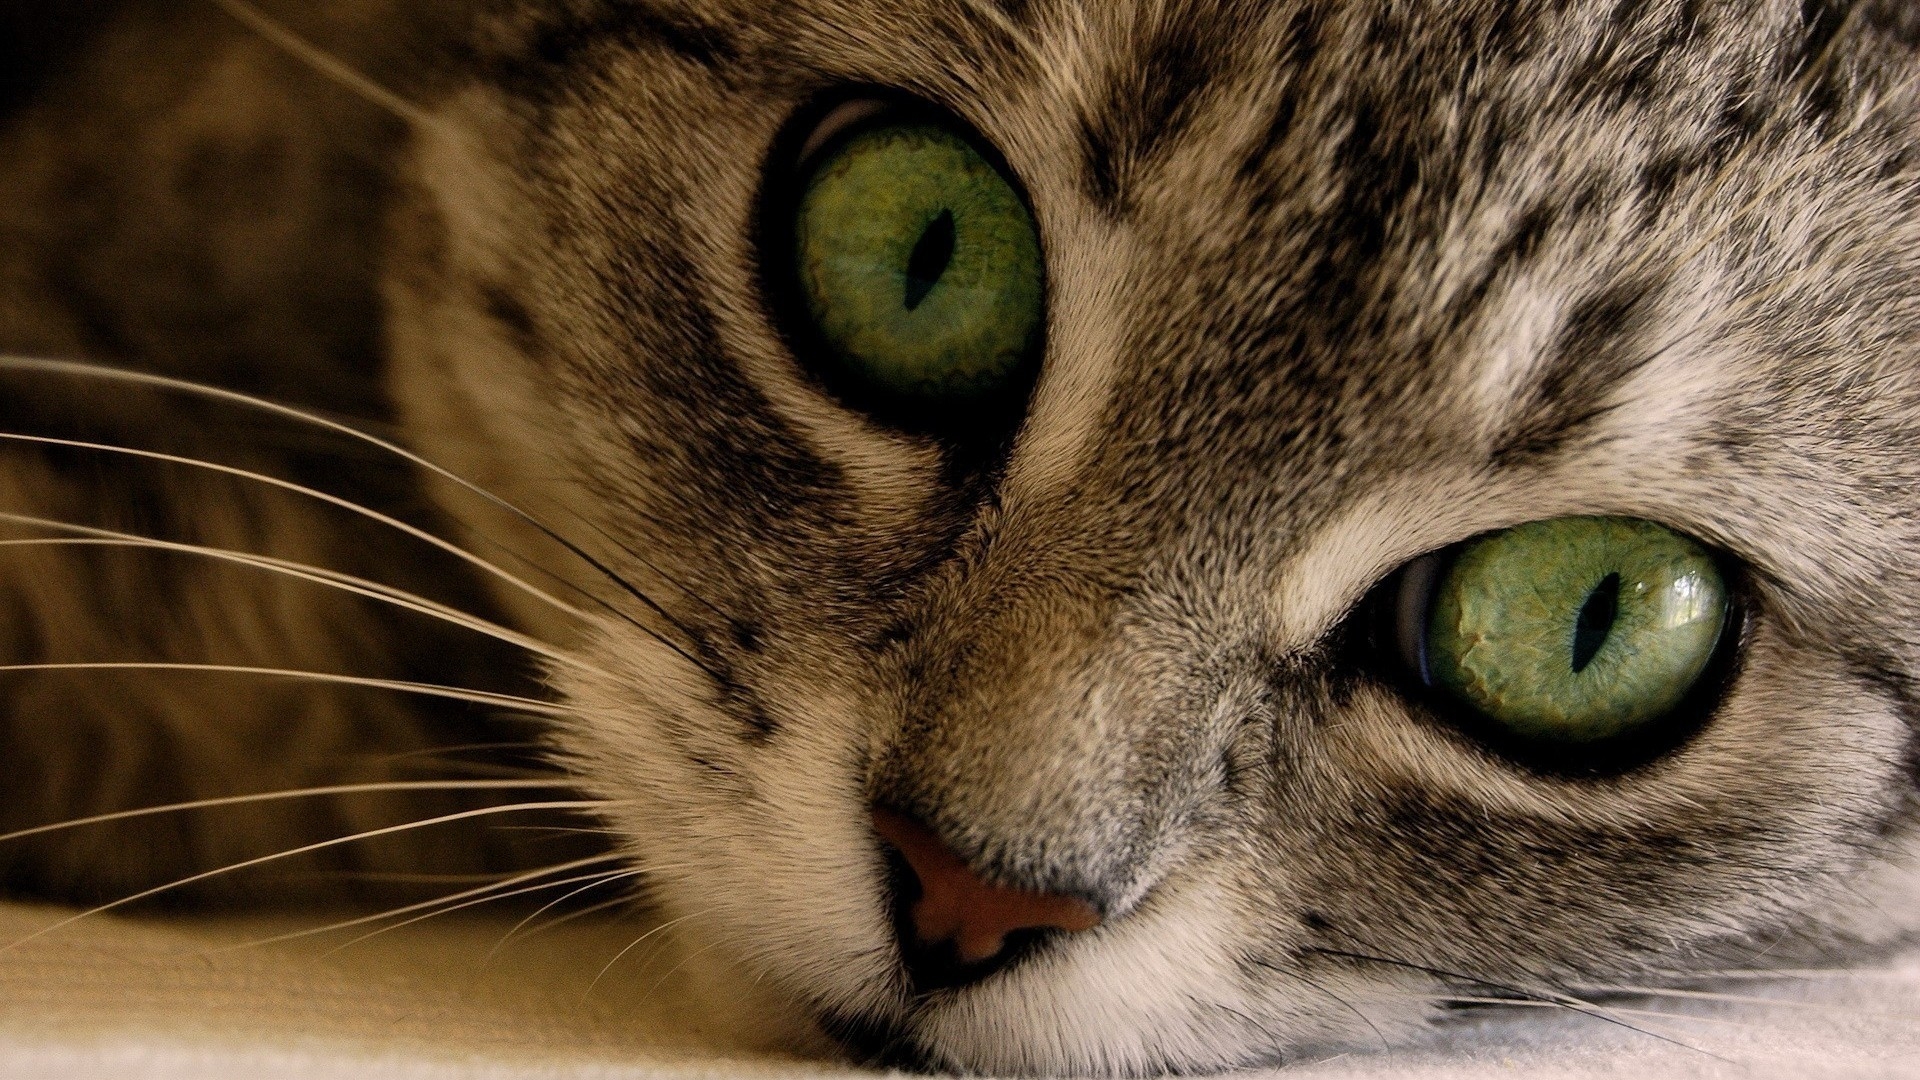 Green Eye Manx Cat for 1920 x 1080 HDTV 1080p resolution